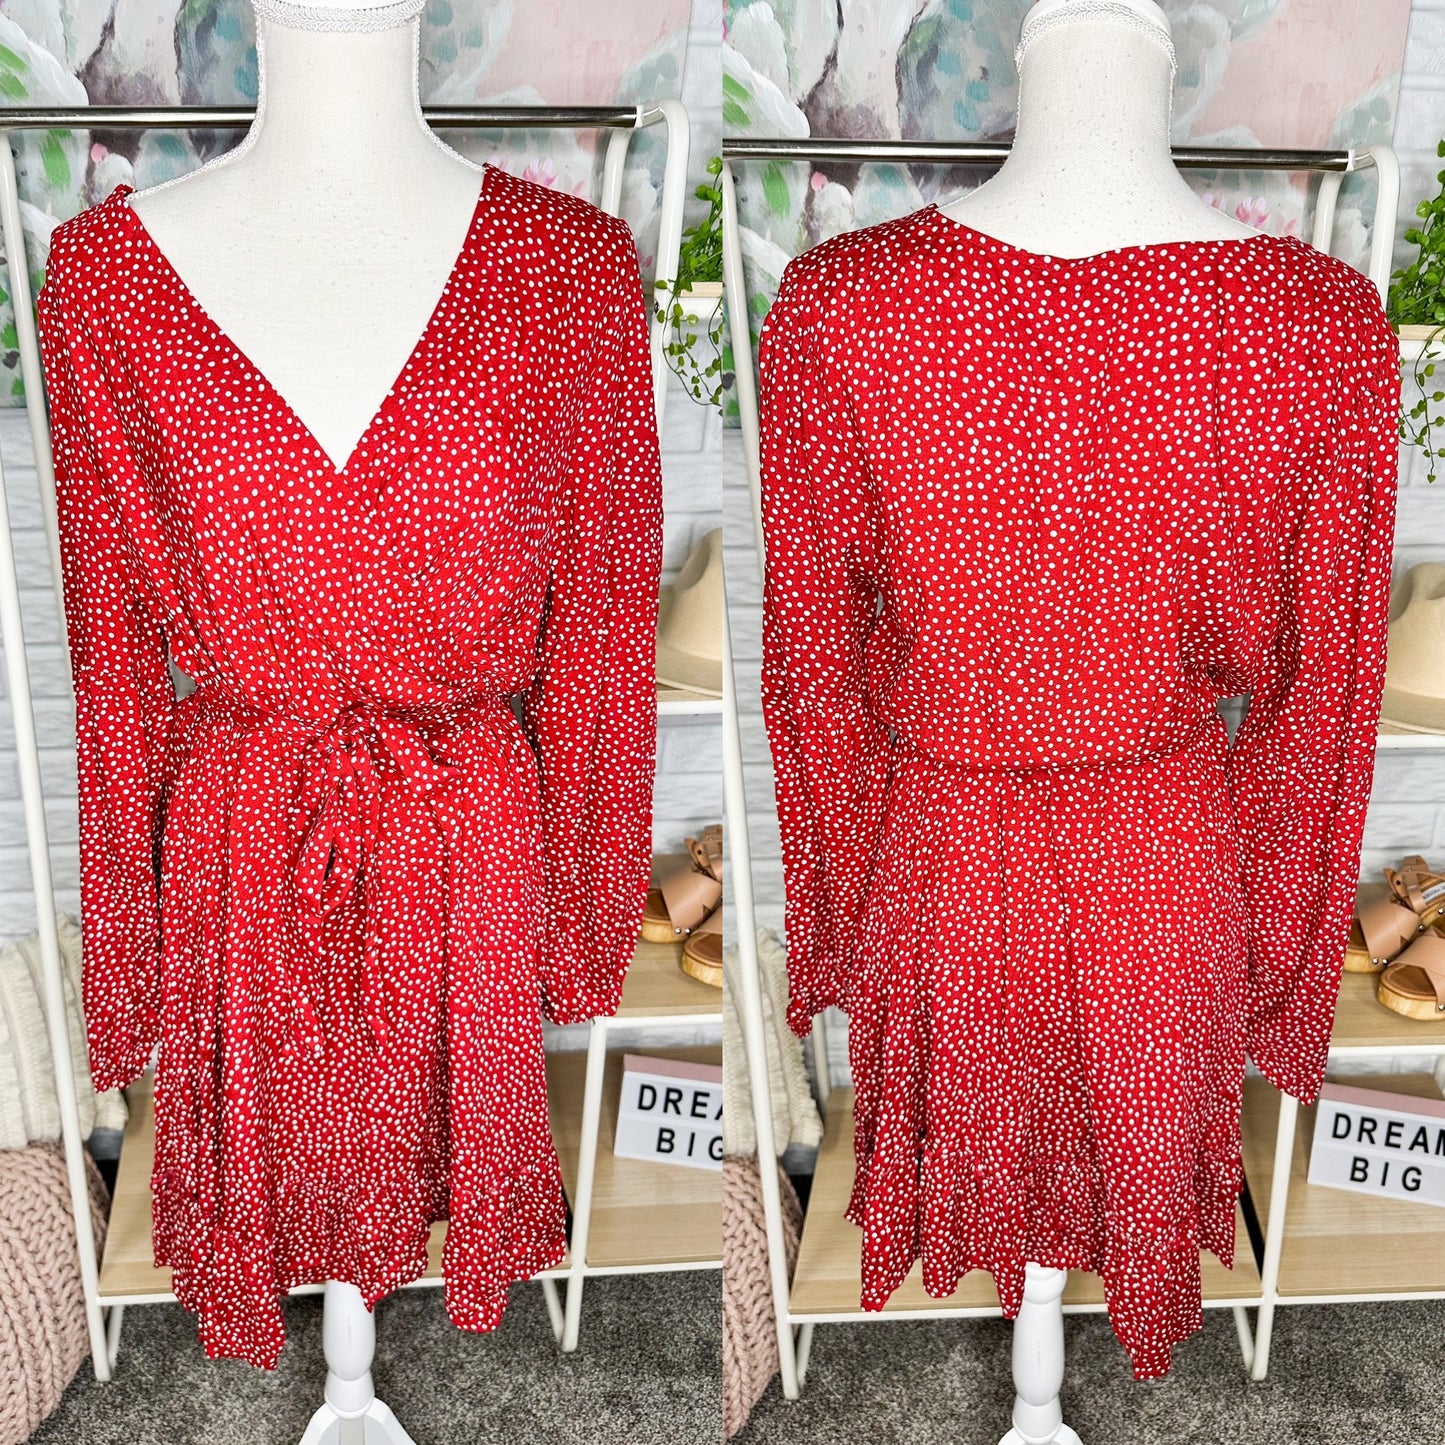 Kojooin New Red Dot Long Sleeve Dress Size Large